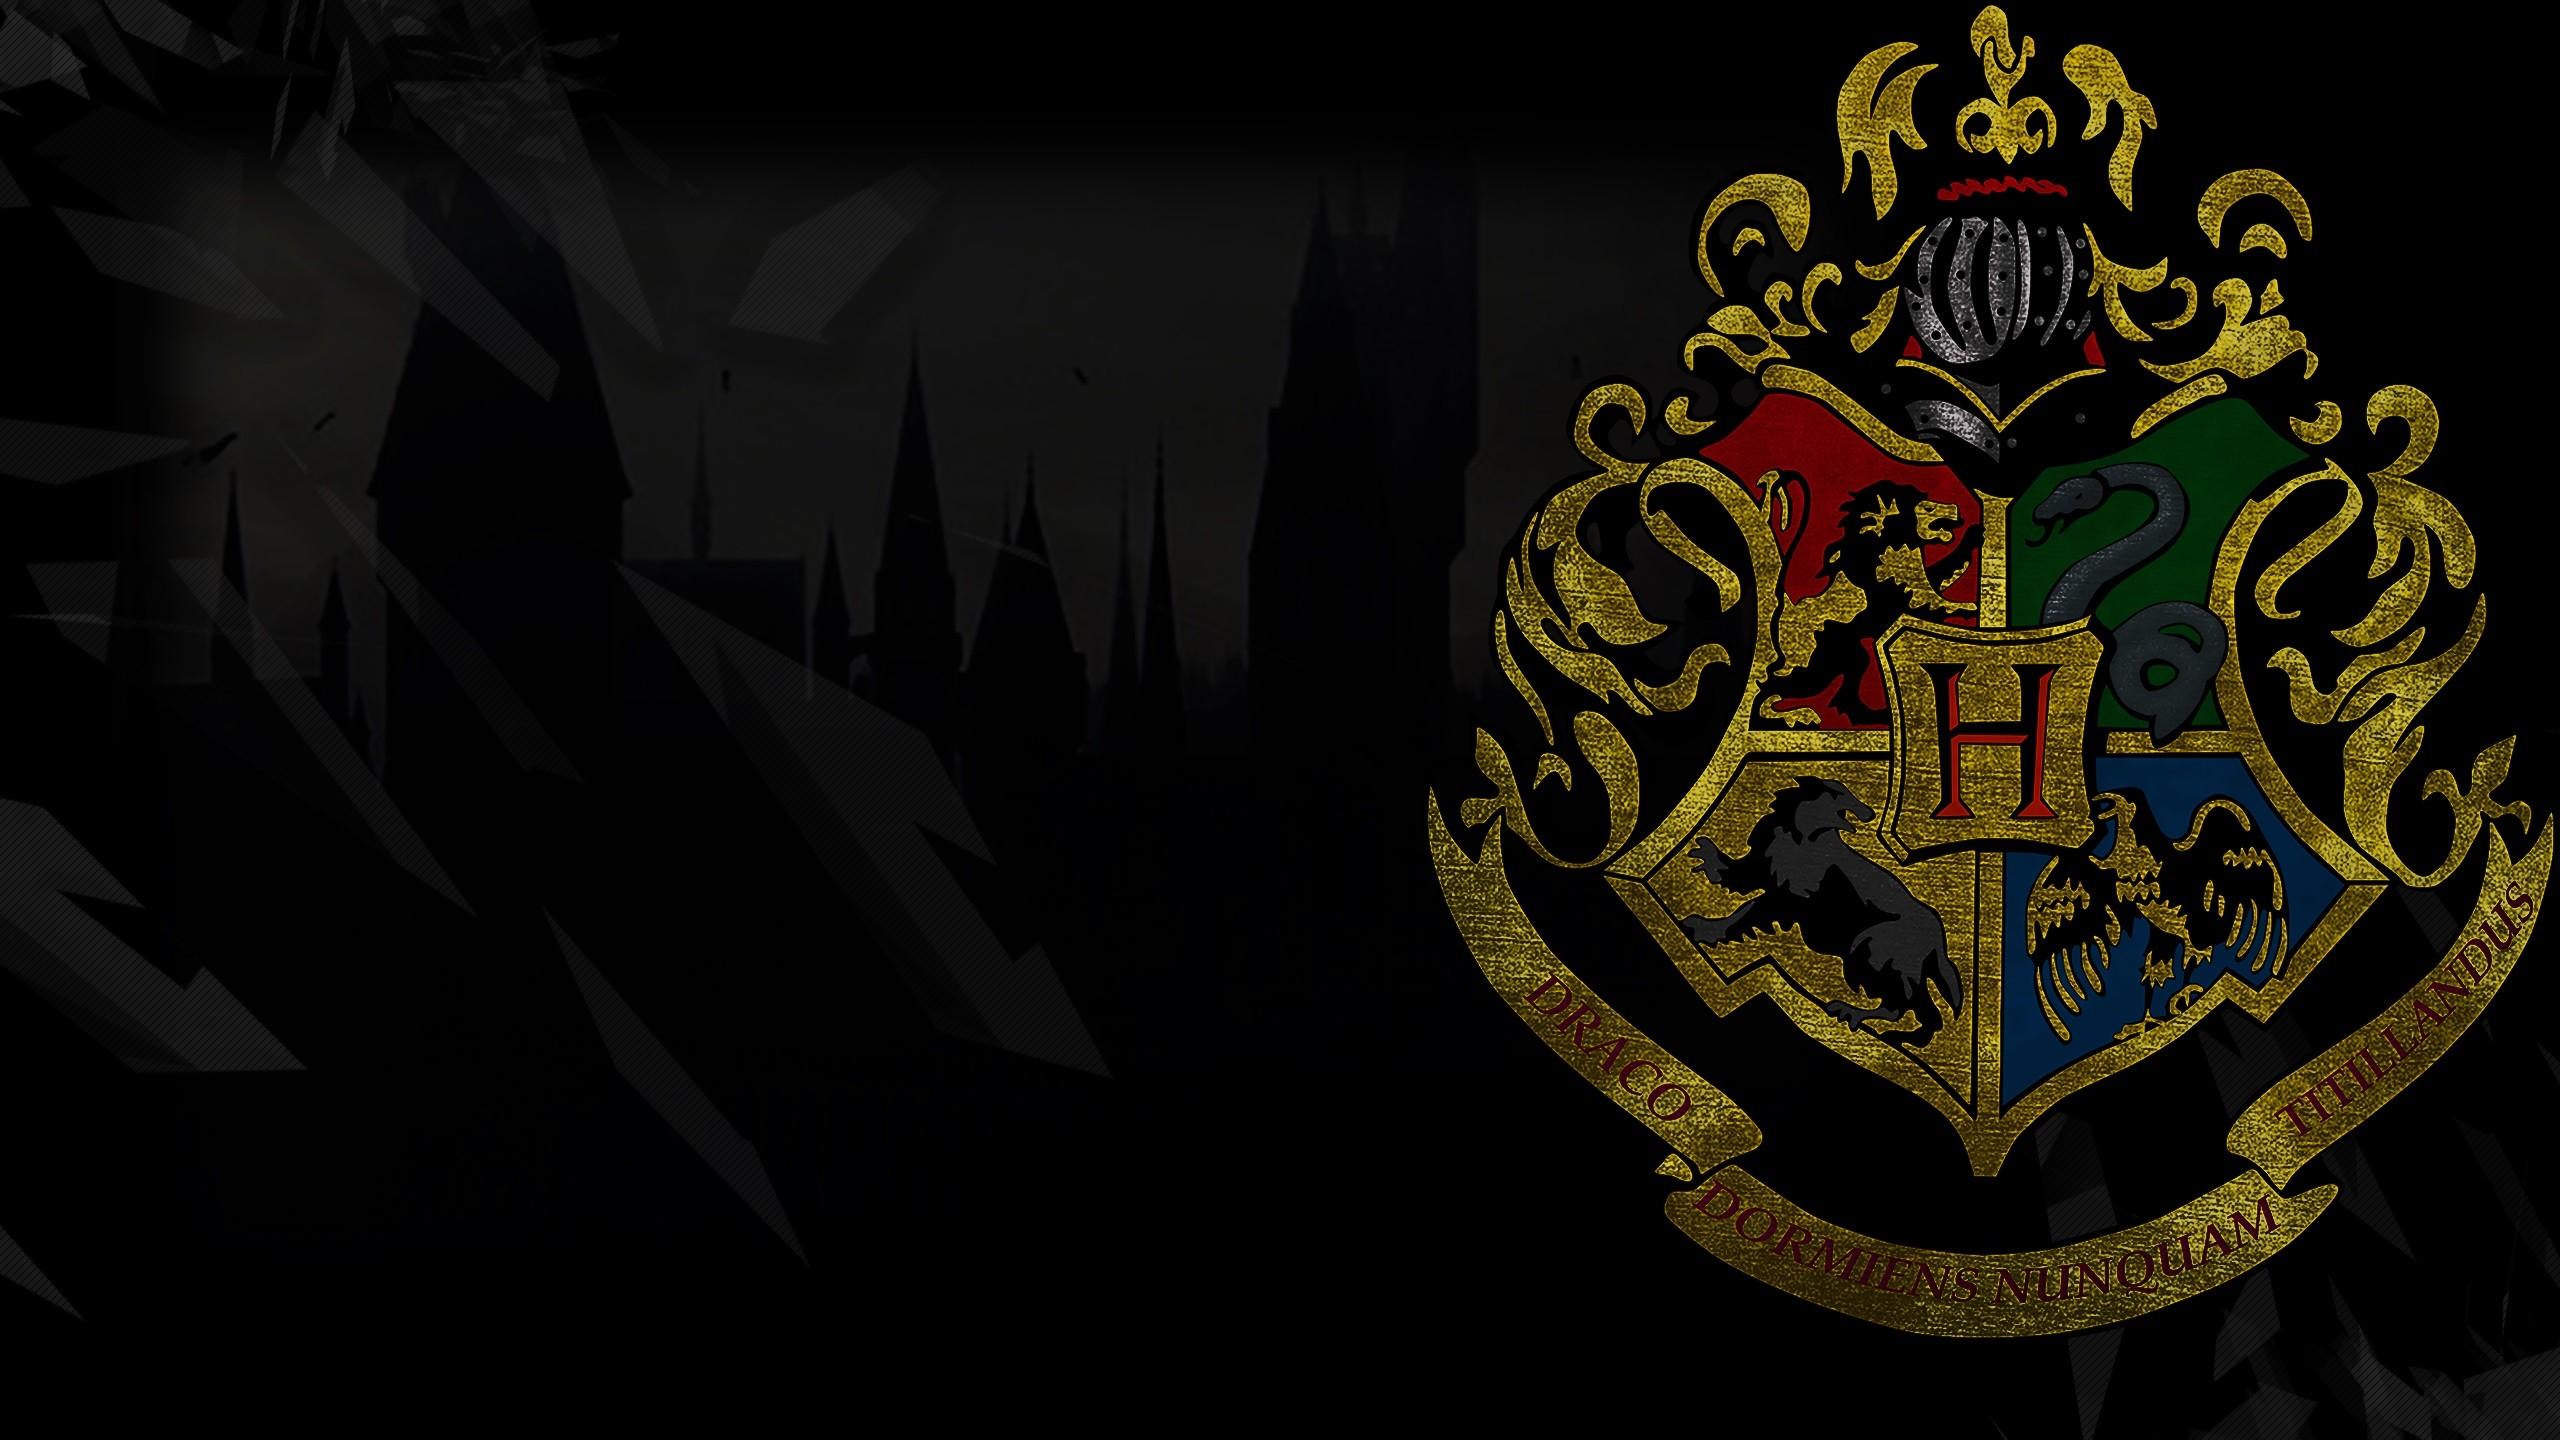 Hogwarts Logo Wallpaper